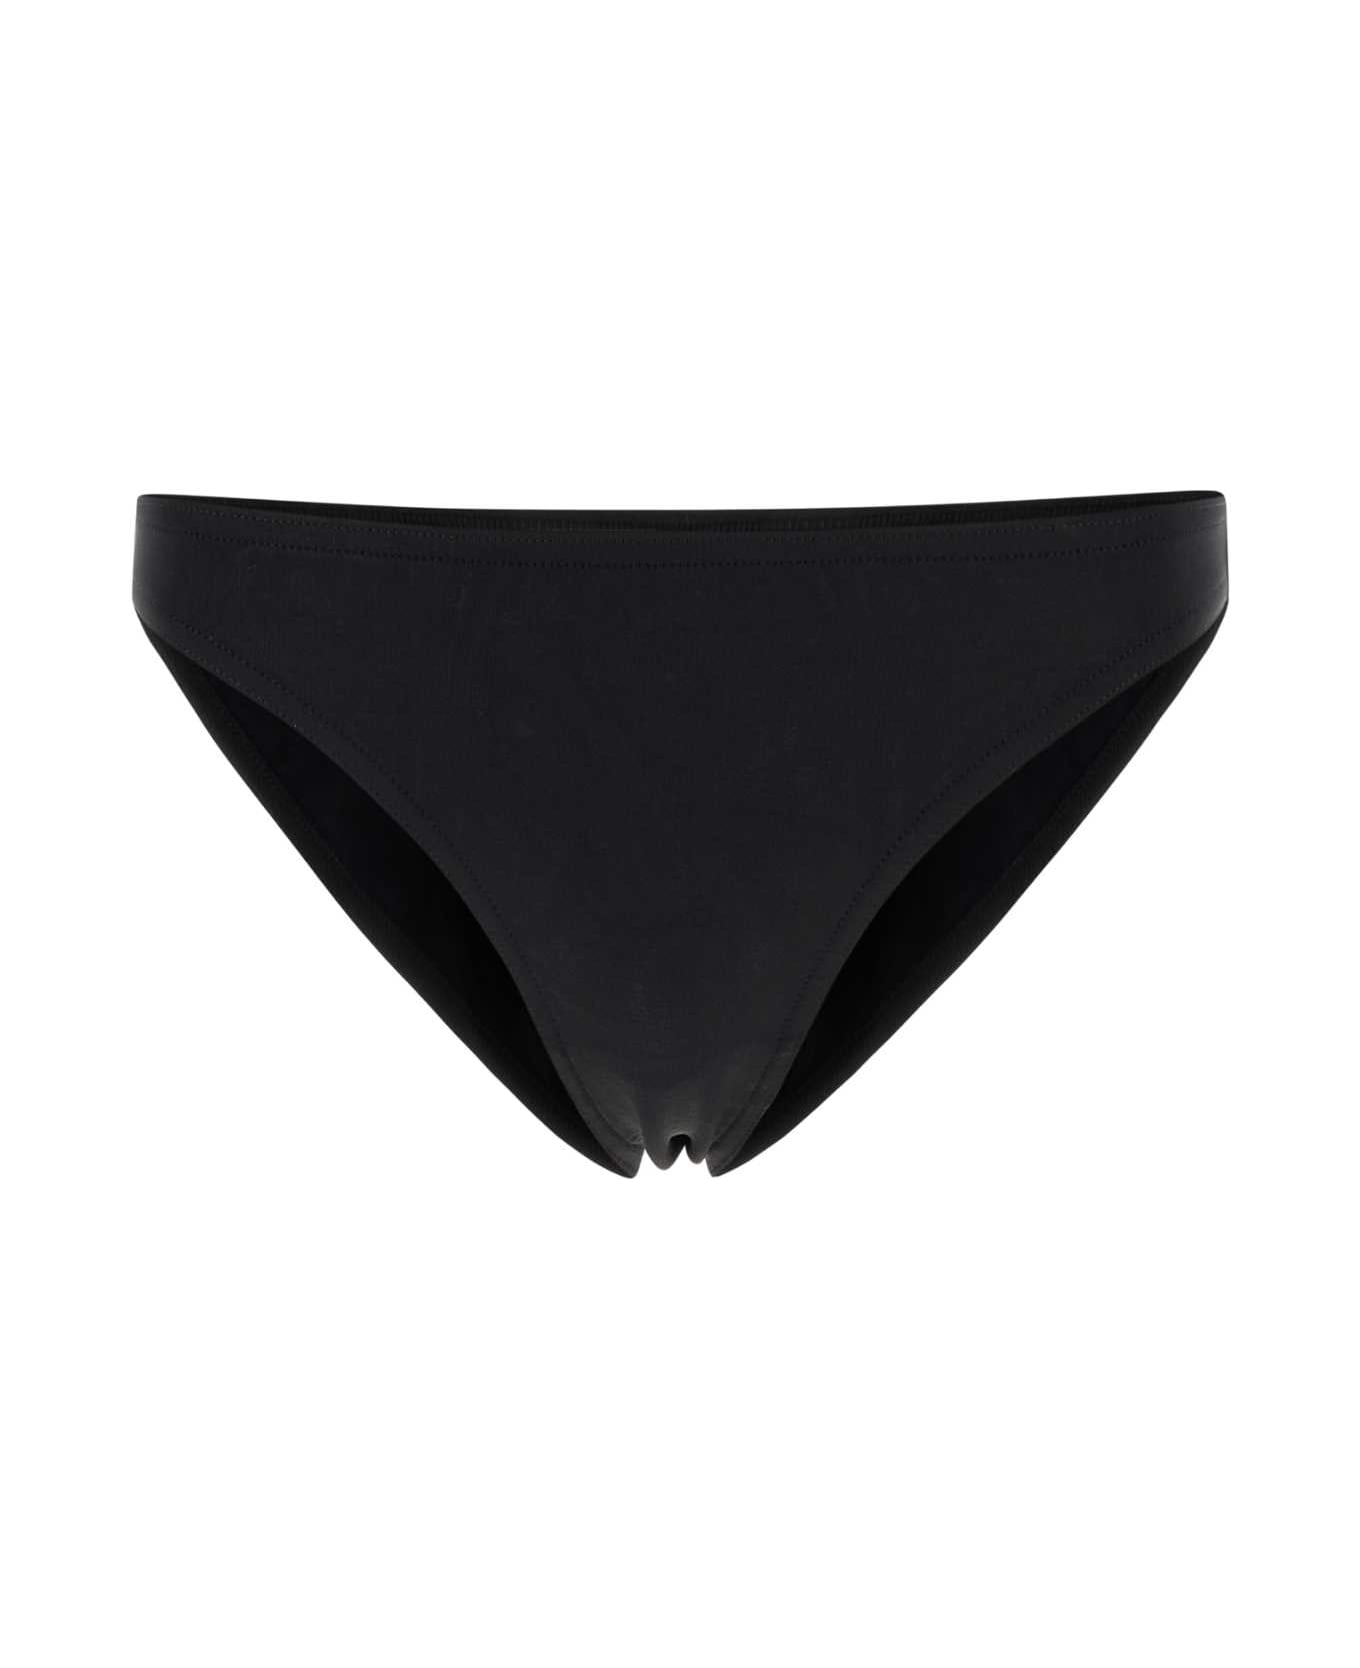 Eres Black Stretch Nylon Bikini Bottom - NOIR